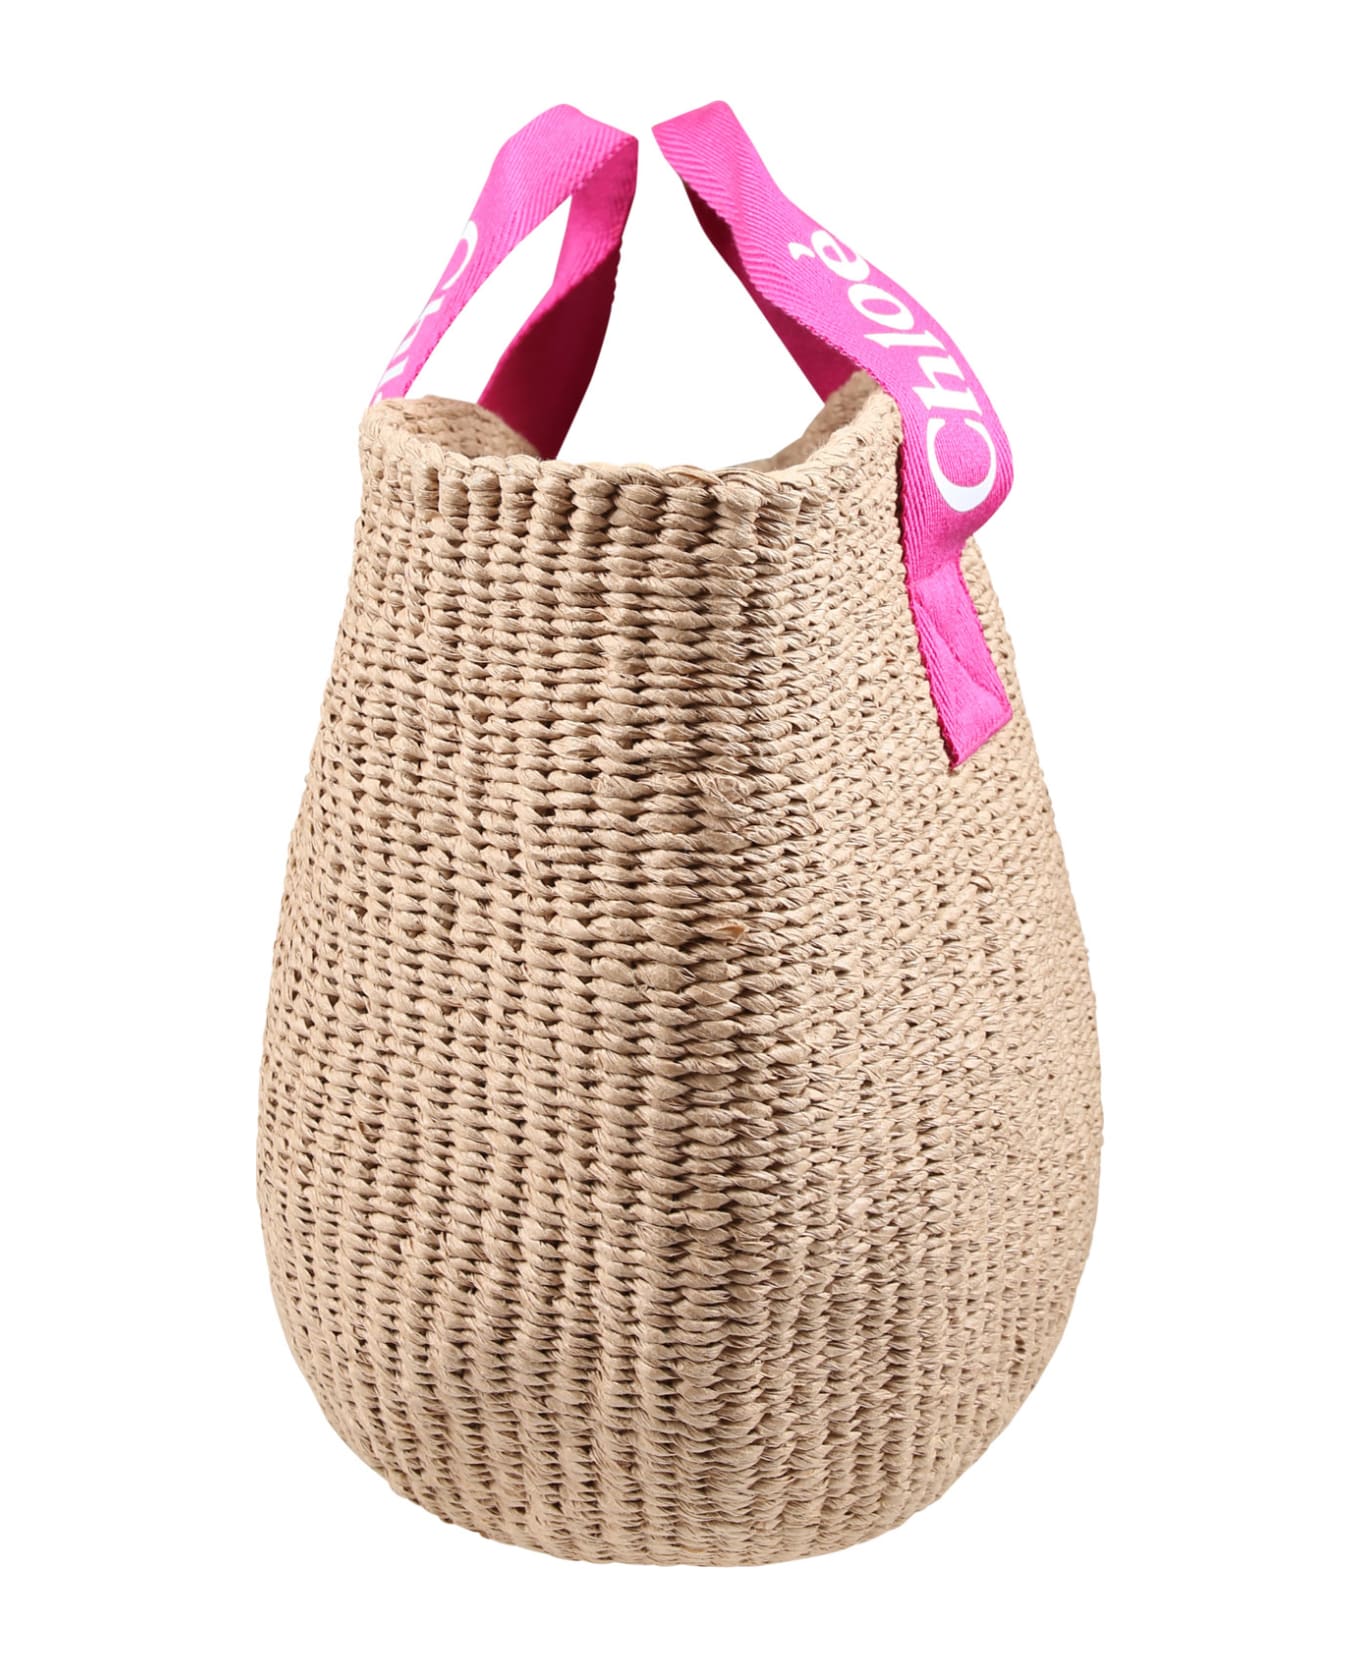 Chloé Casual Beige Straw Bag For Girl - Beige